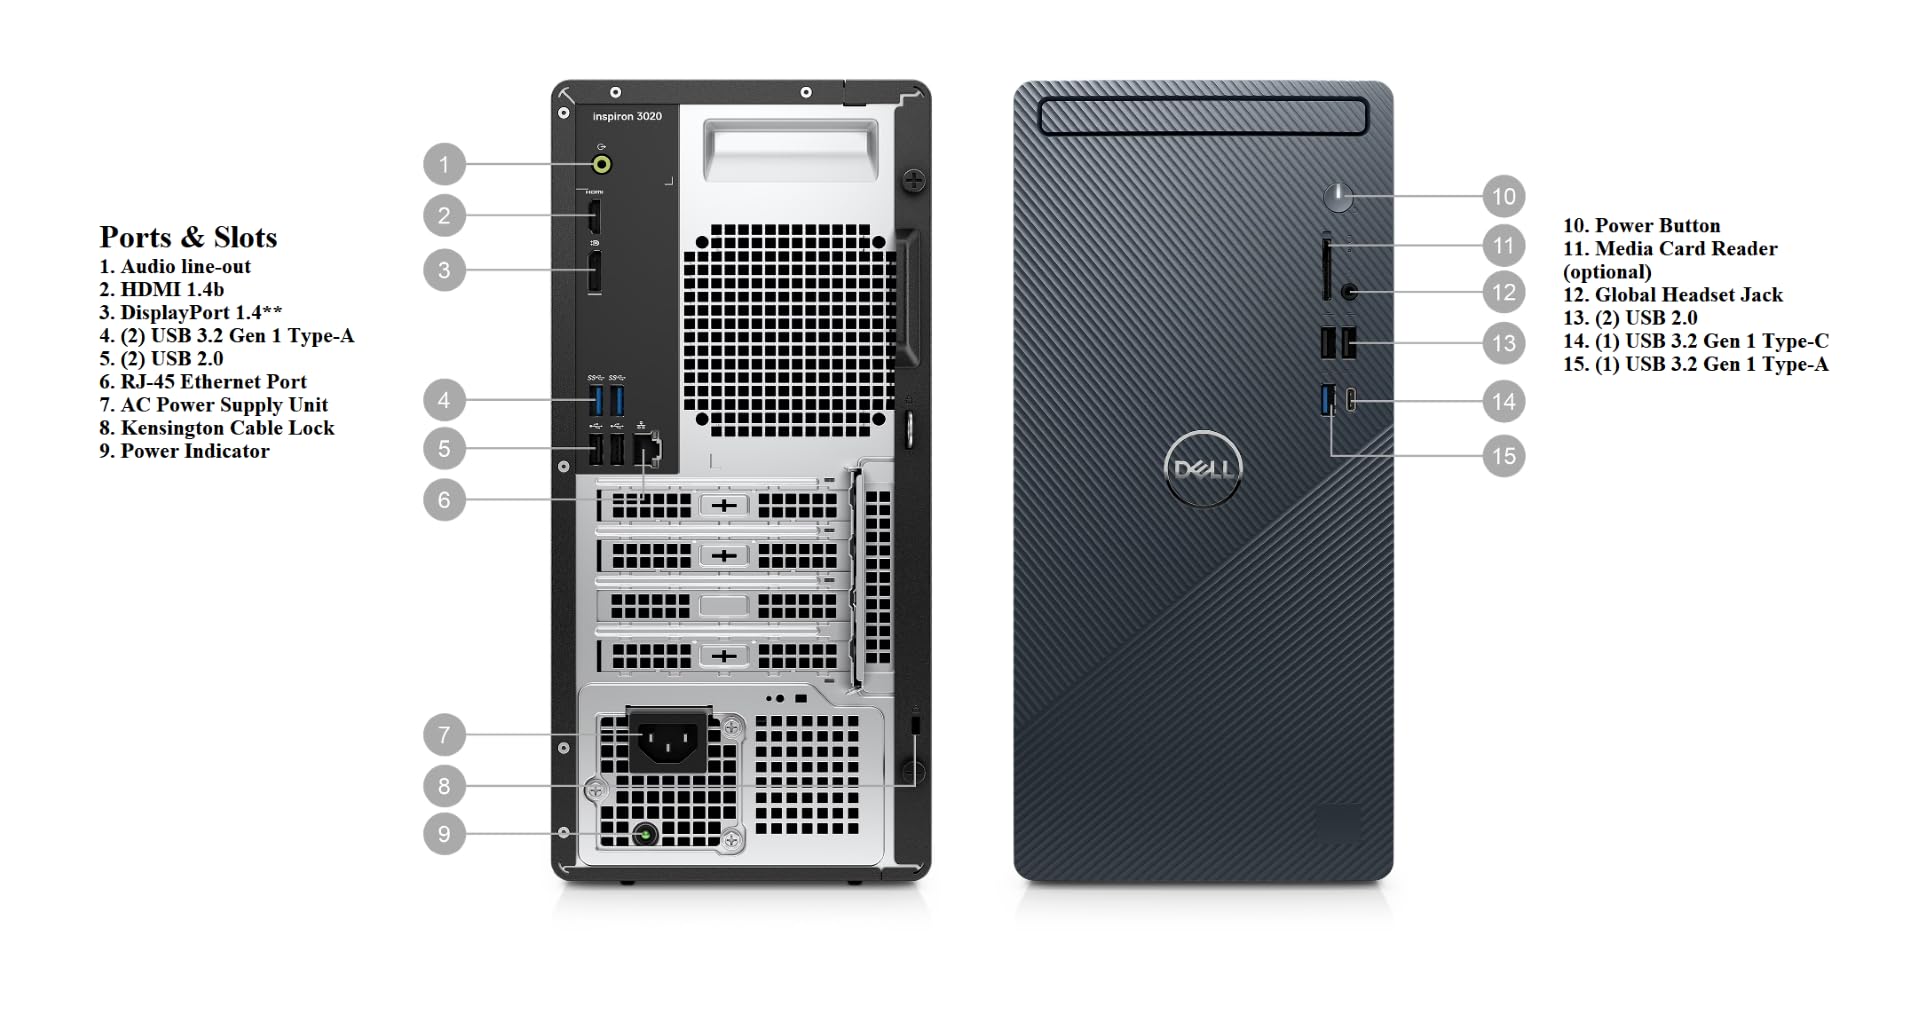 Dell 2023 Inspiron 3020 Tower Desktop Business Computer, 13th Gen Intel Core i7-13700, Intel UHD 770 Graphics,Bluetooth, WiFi, USB 3.1, Windows 11 Pro - Mist Blue (32GB RAM | 1TB SSD)